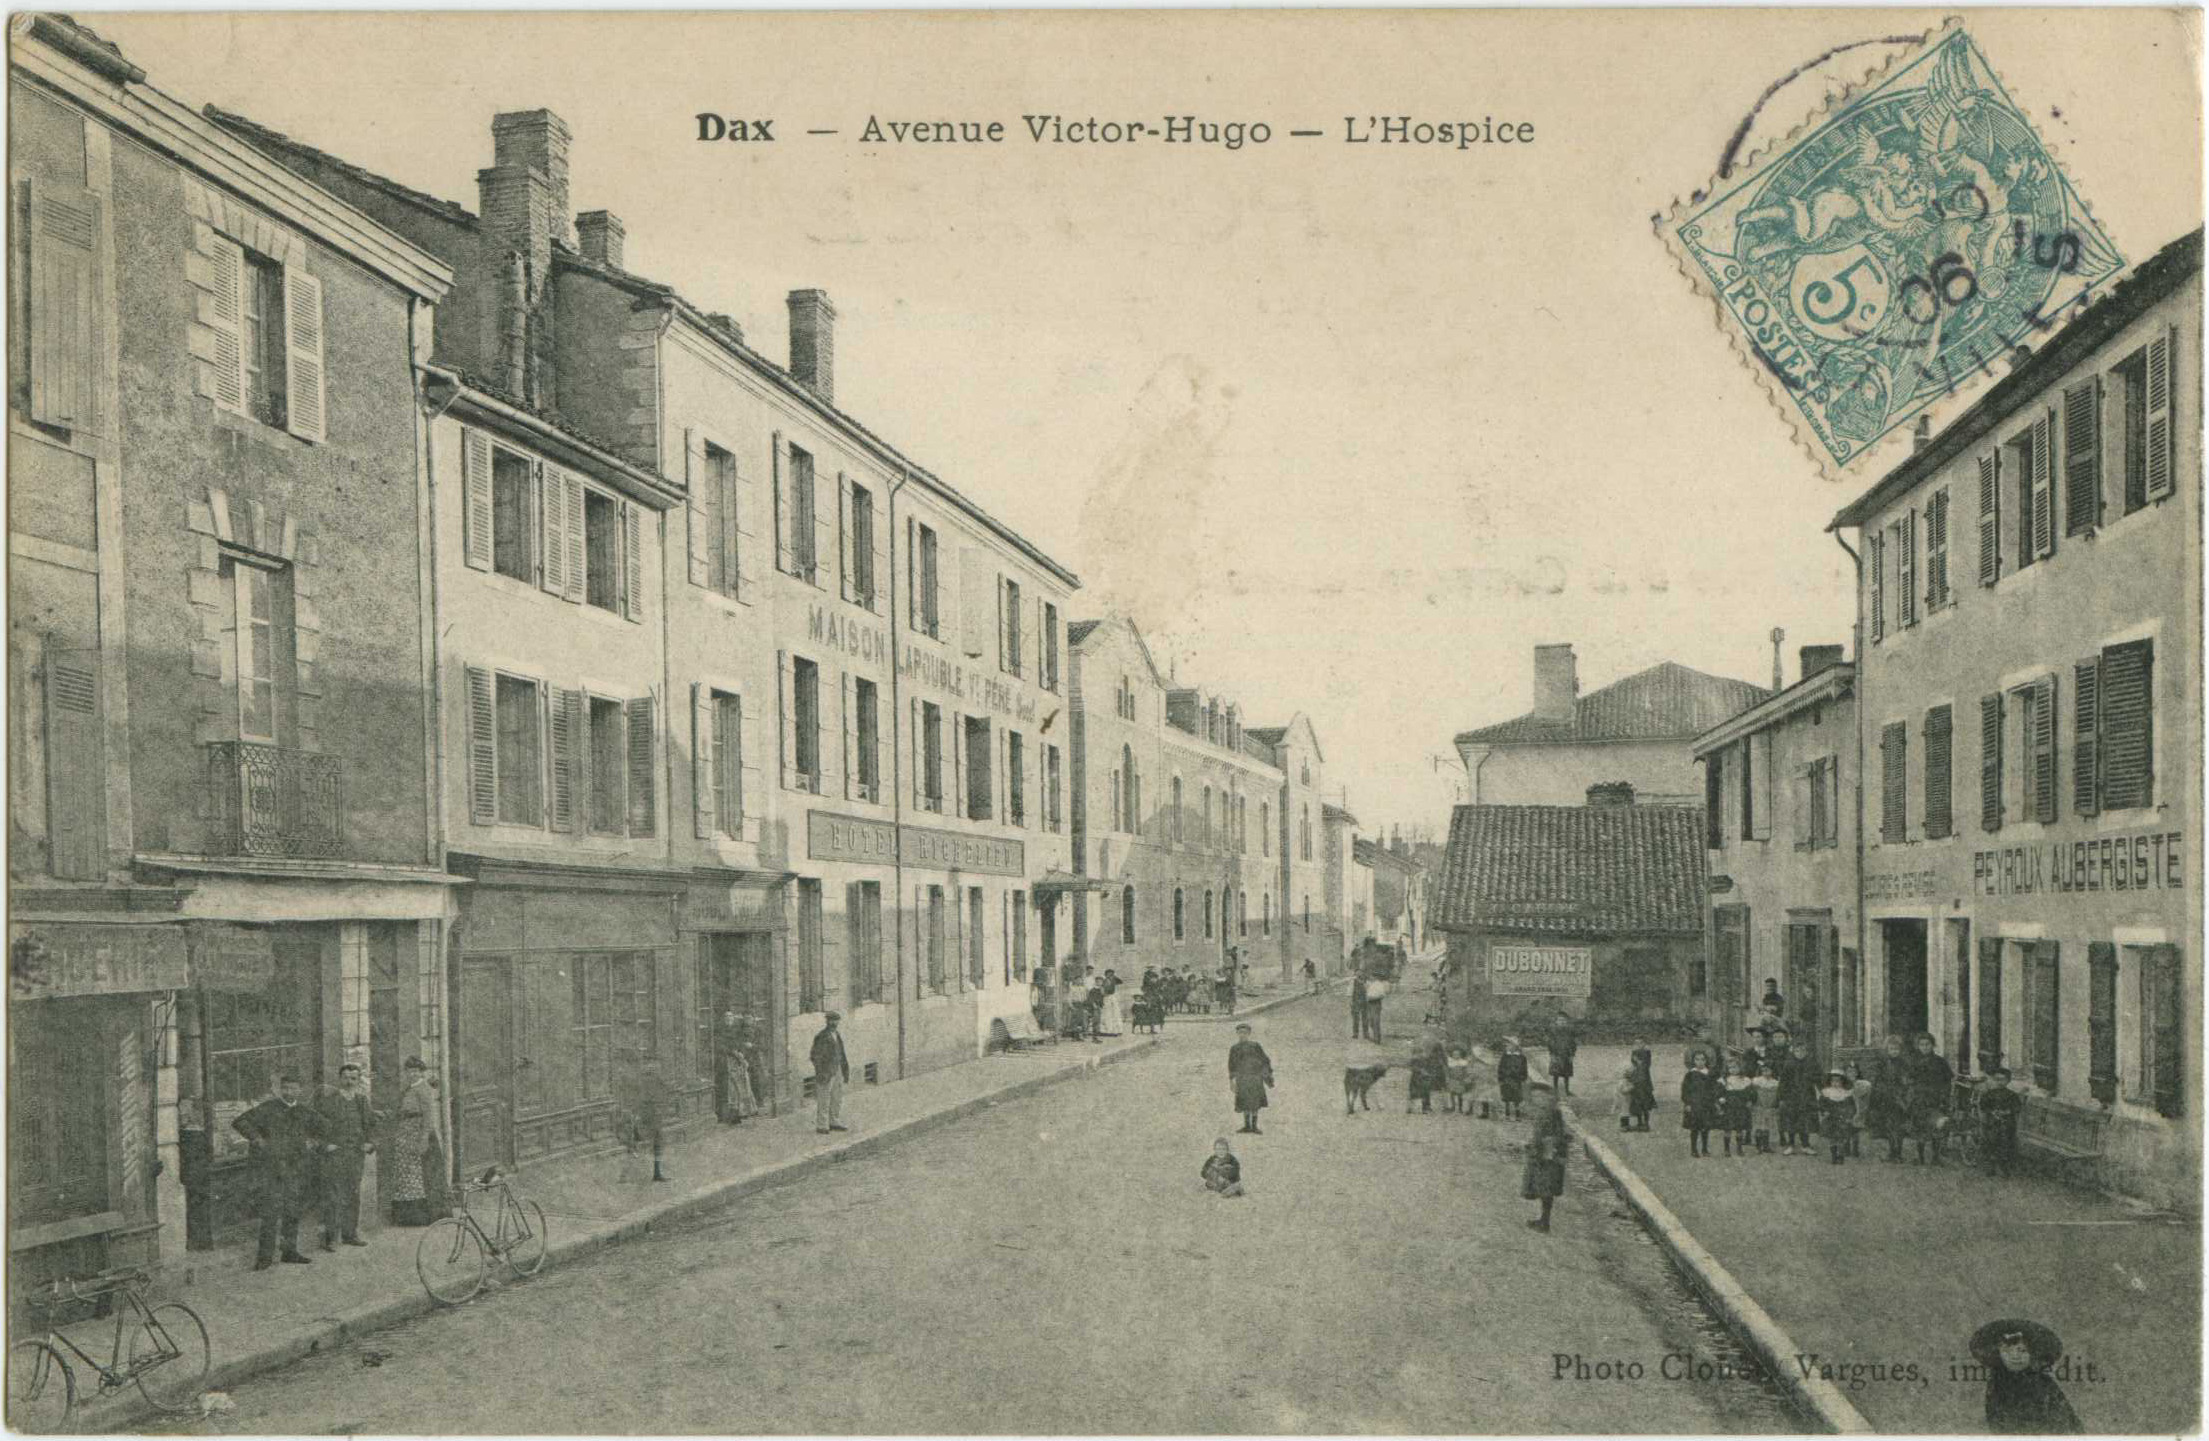 Dax - Avenue Victor-Hugo - L'Hospice